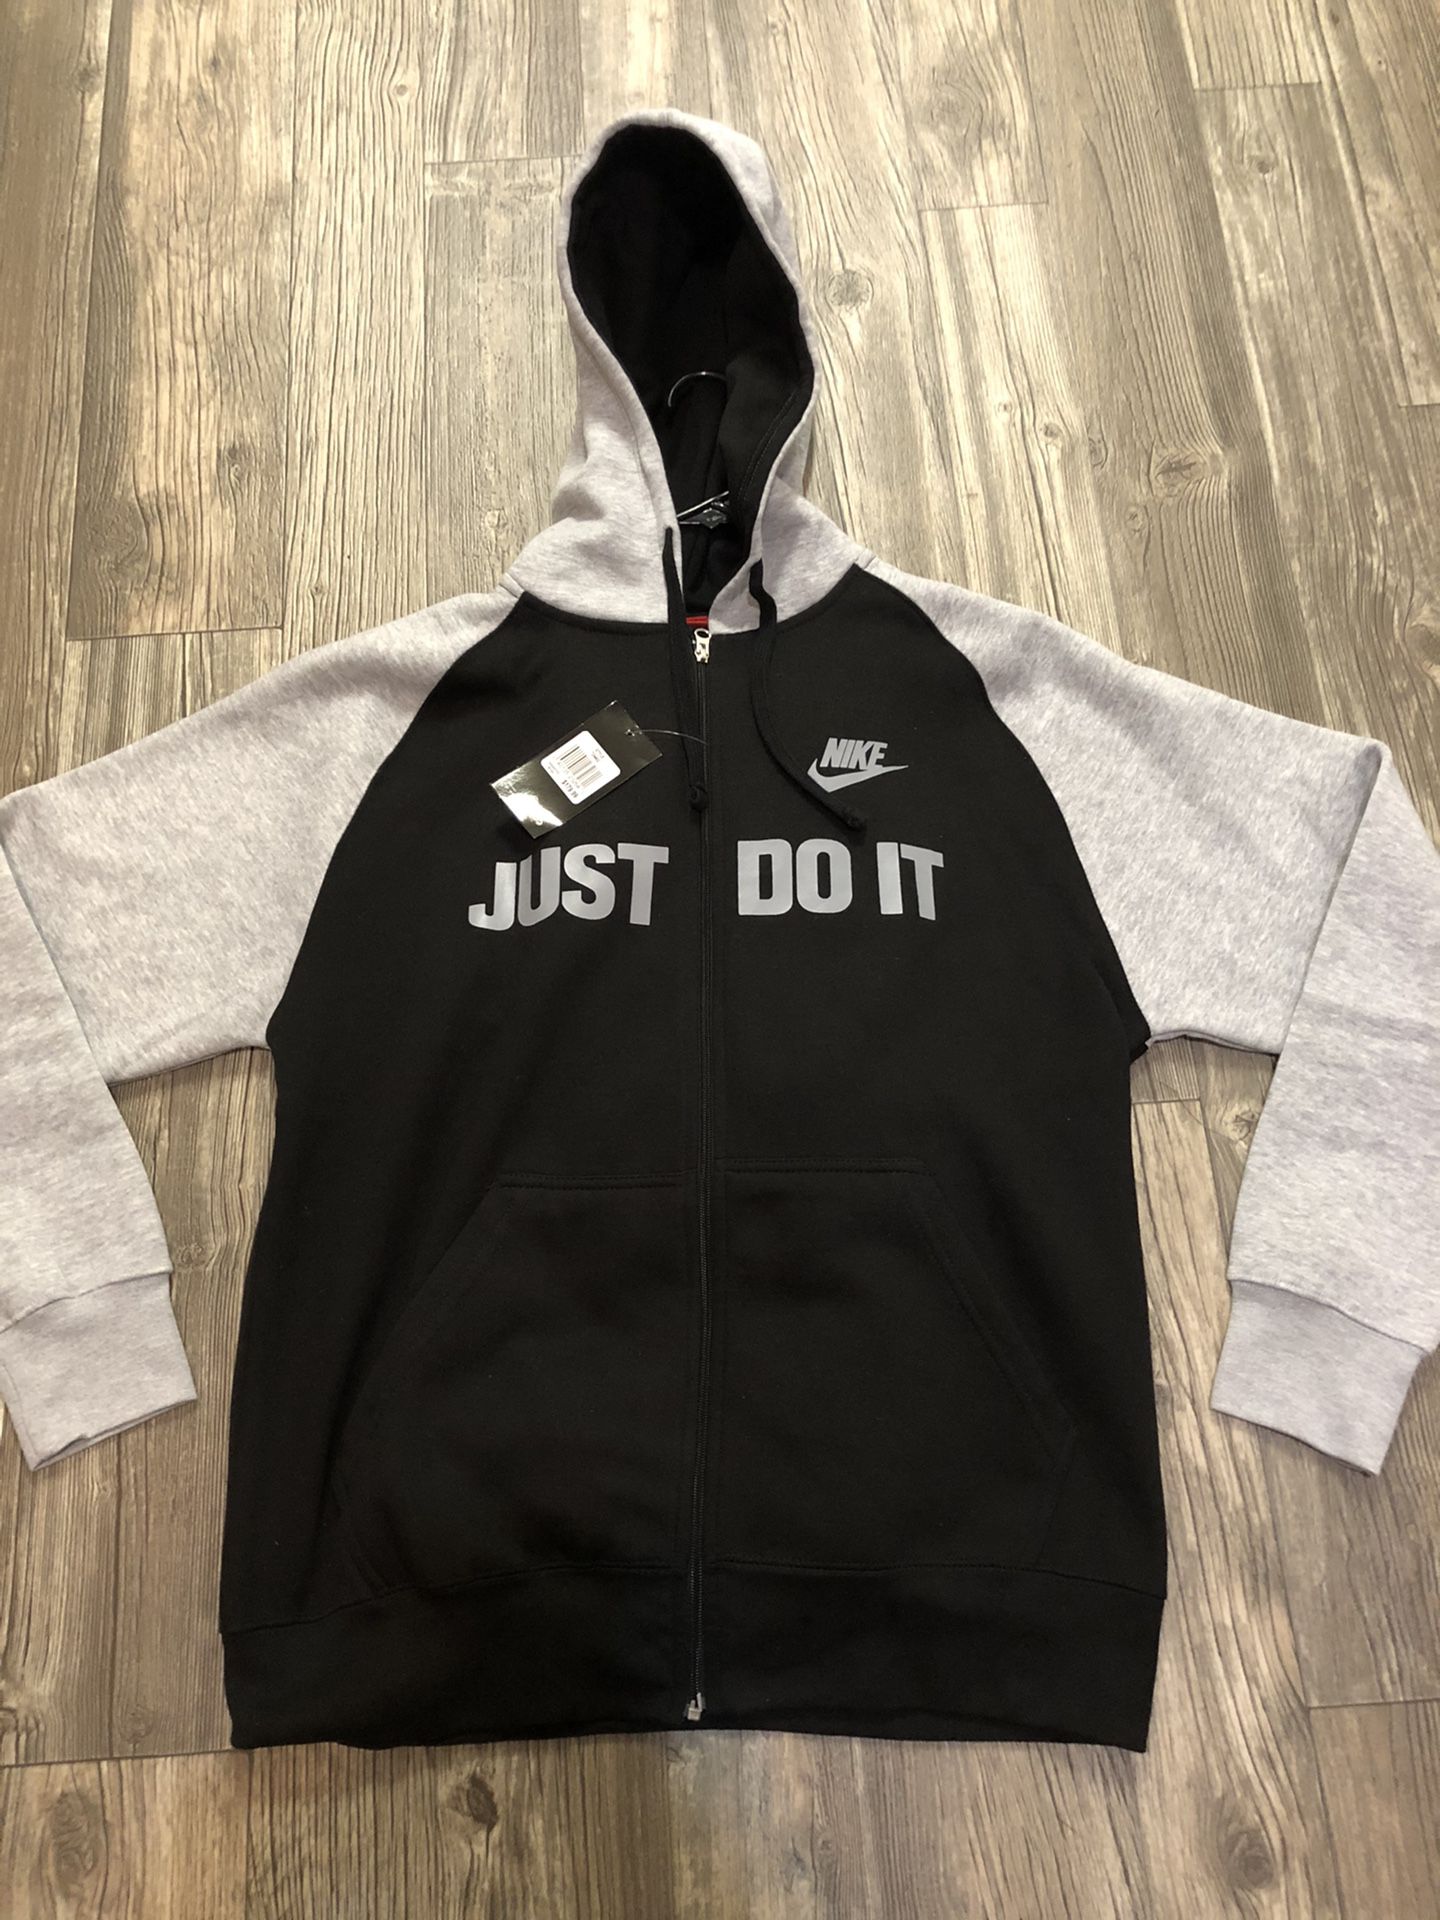 Nike Sweatsuit Jacket